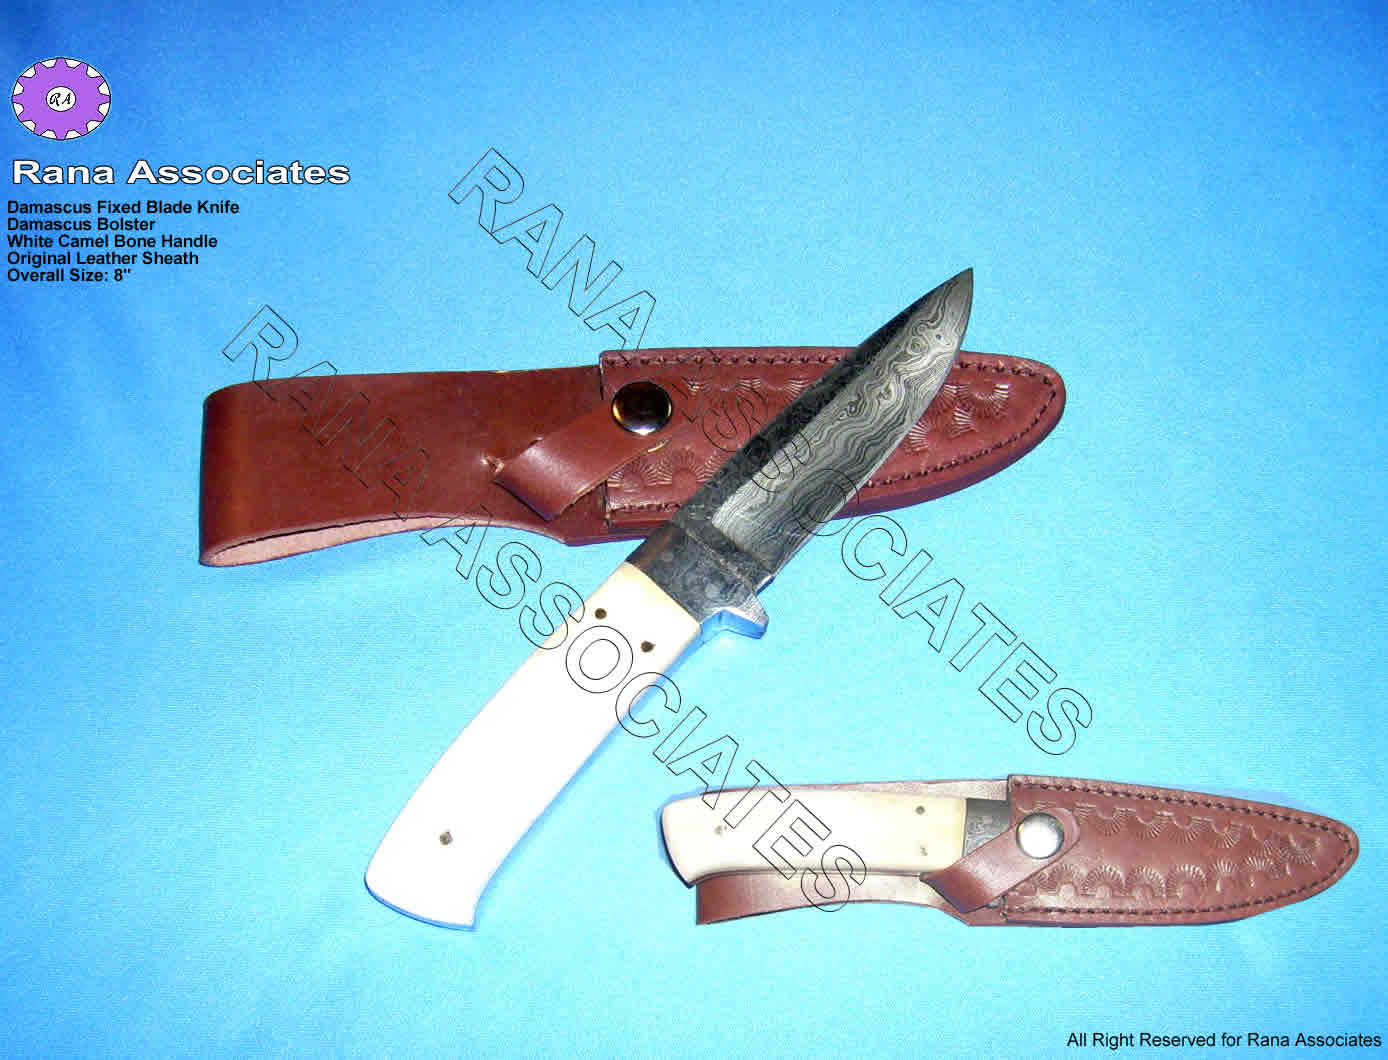  Damascus Pocket Knife (Дамаск карманный нож)